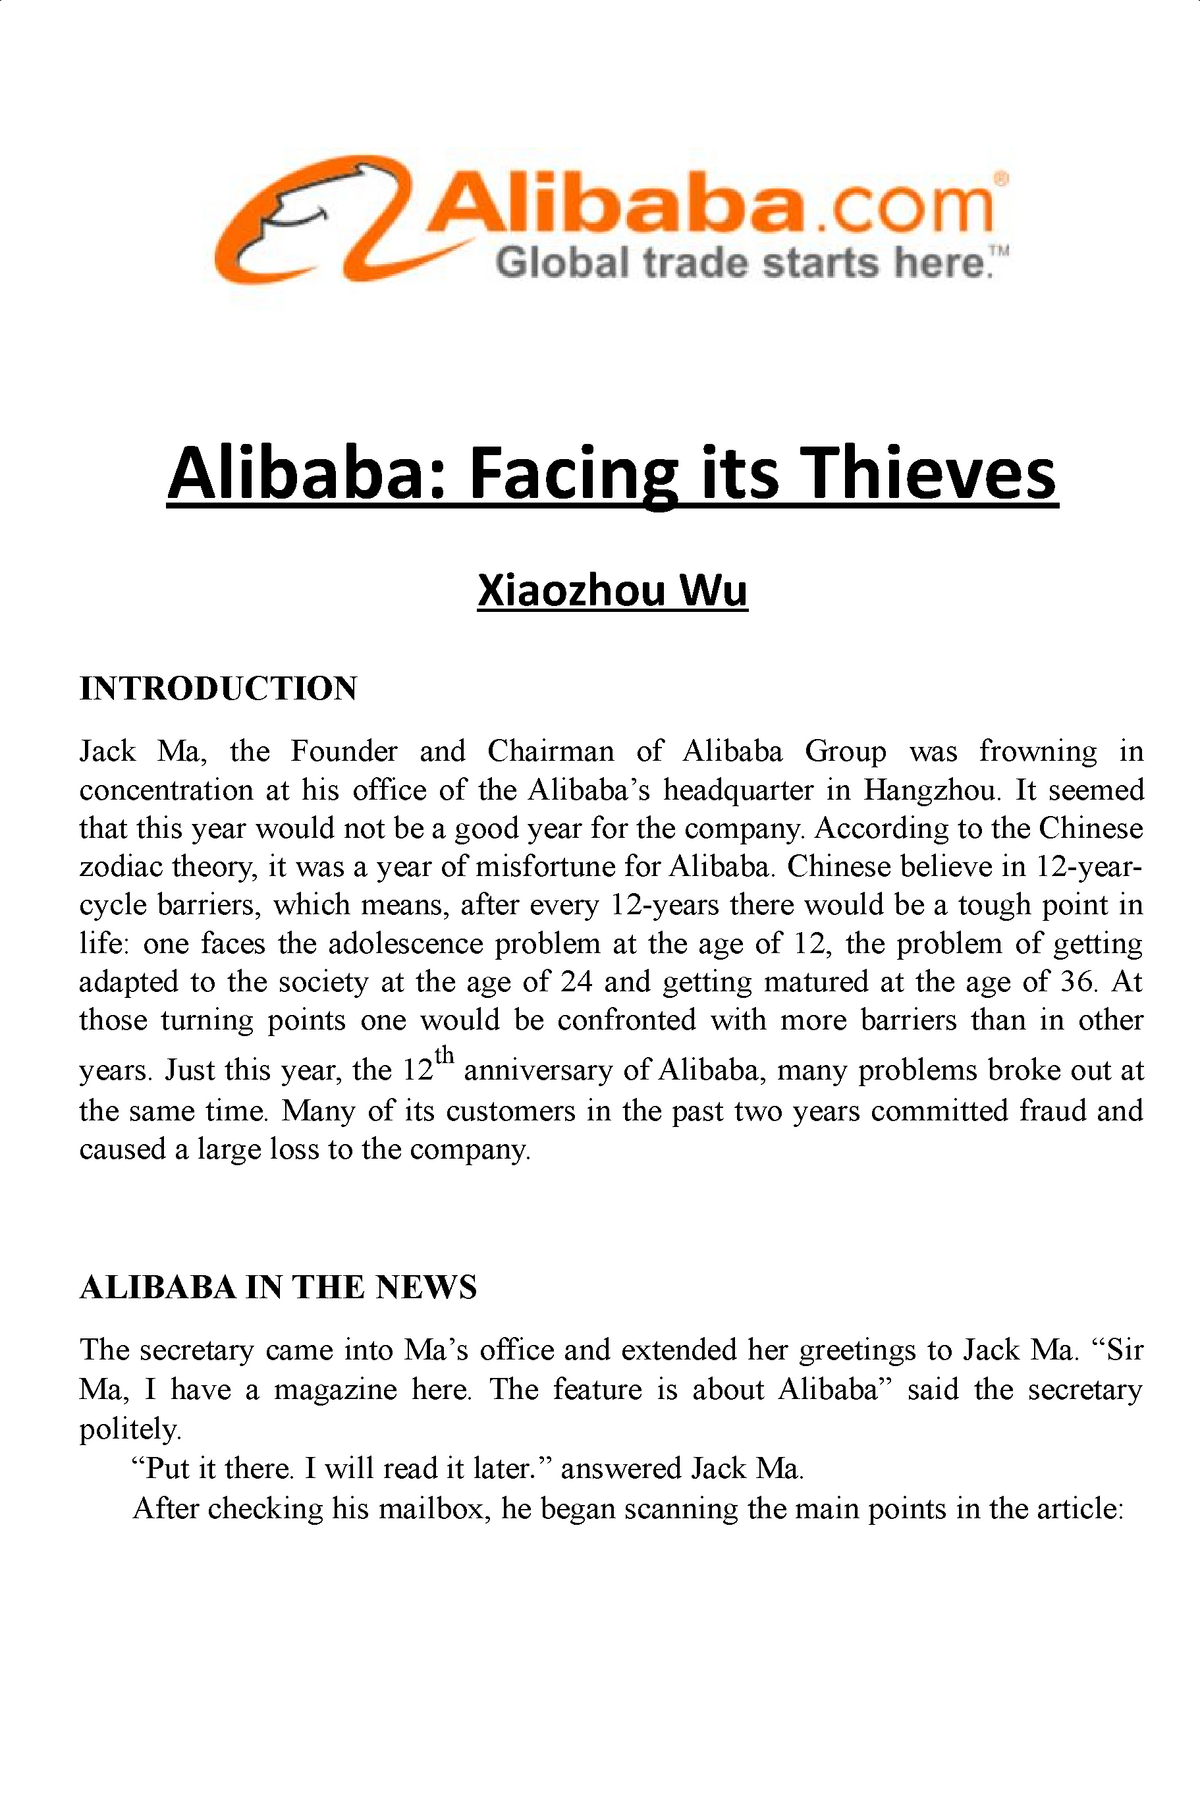 alibaba case study